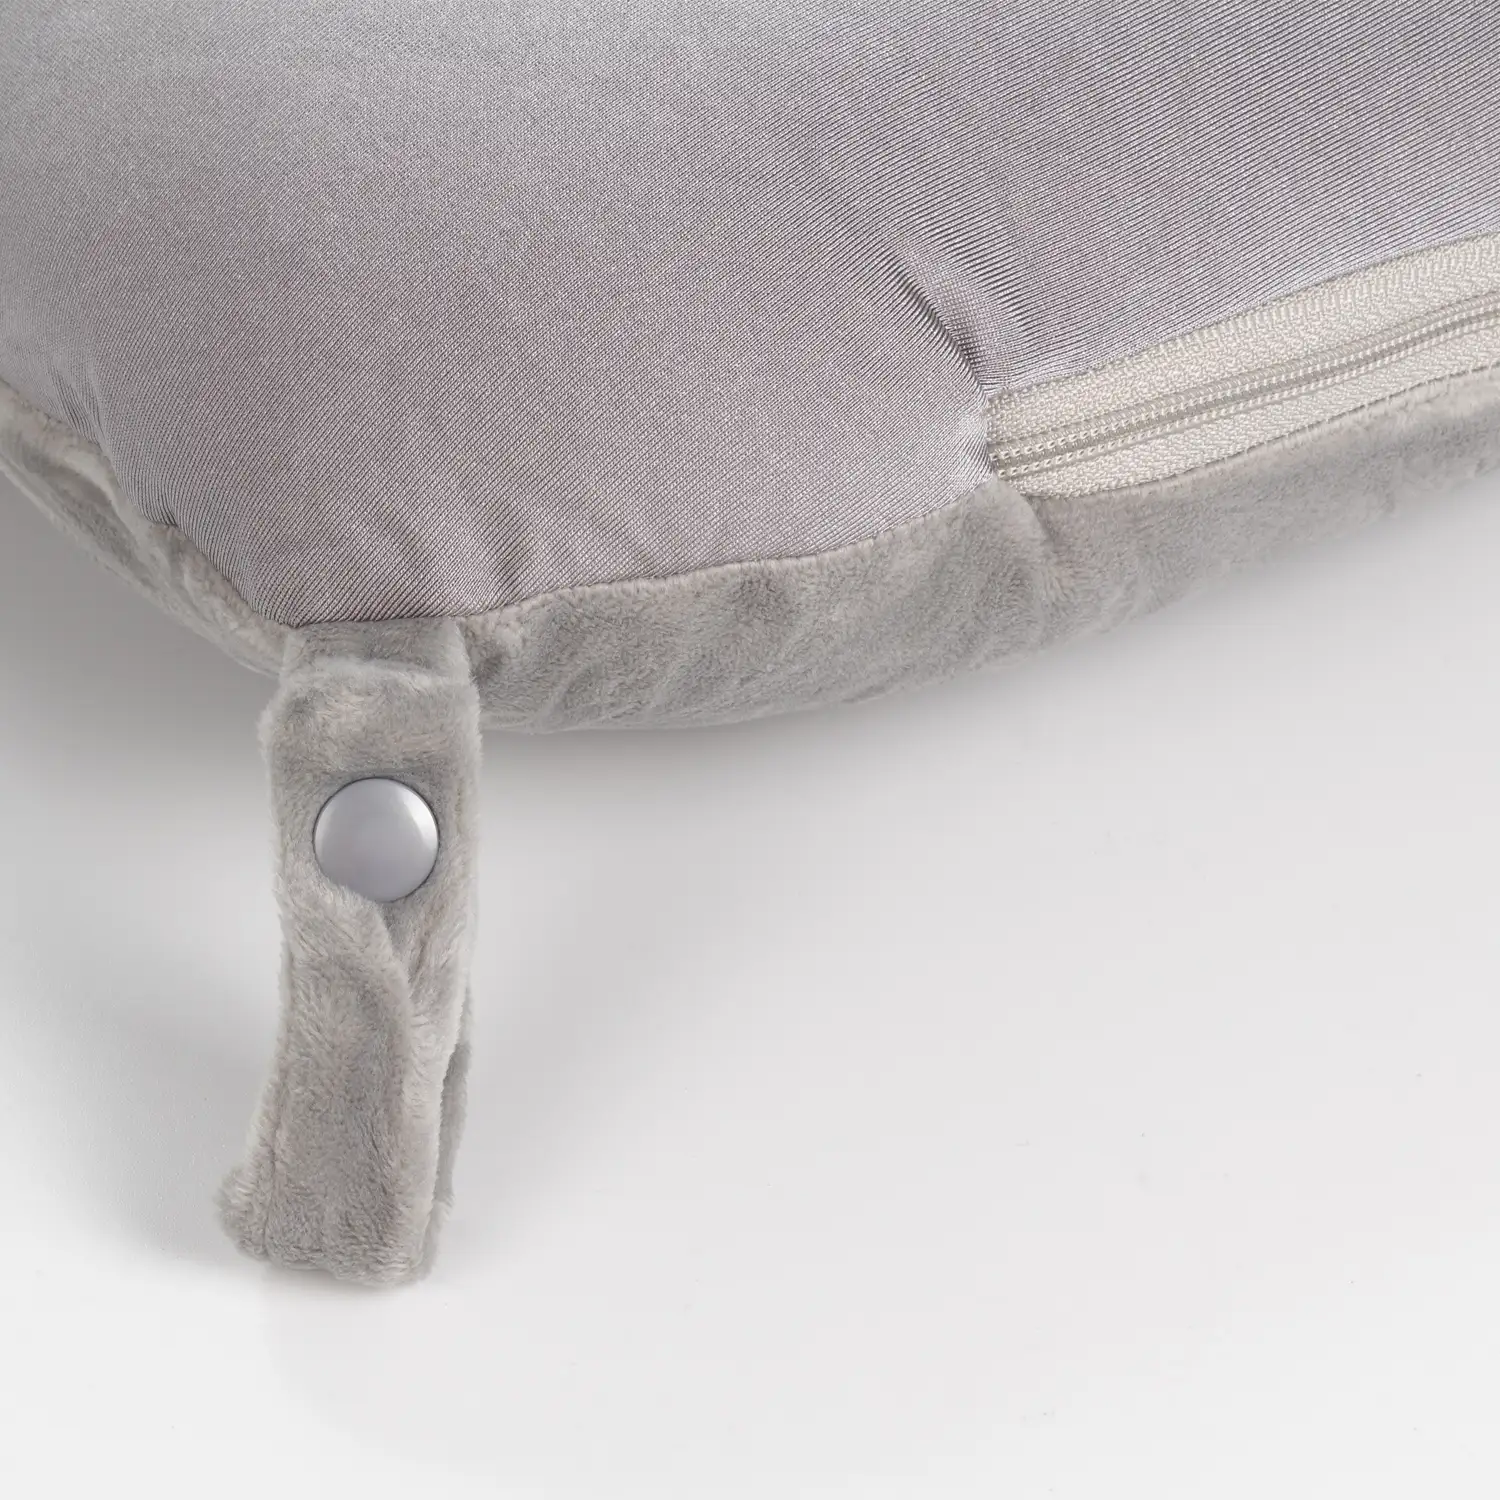 Elefante de peluche convertible en almohada de viaje cojín cervical, 2 en 1.